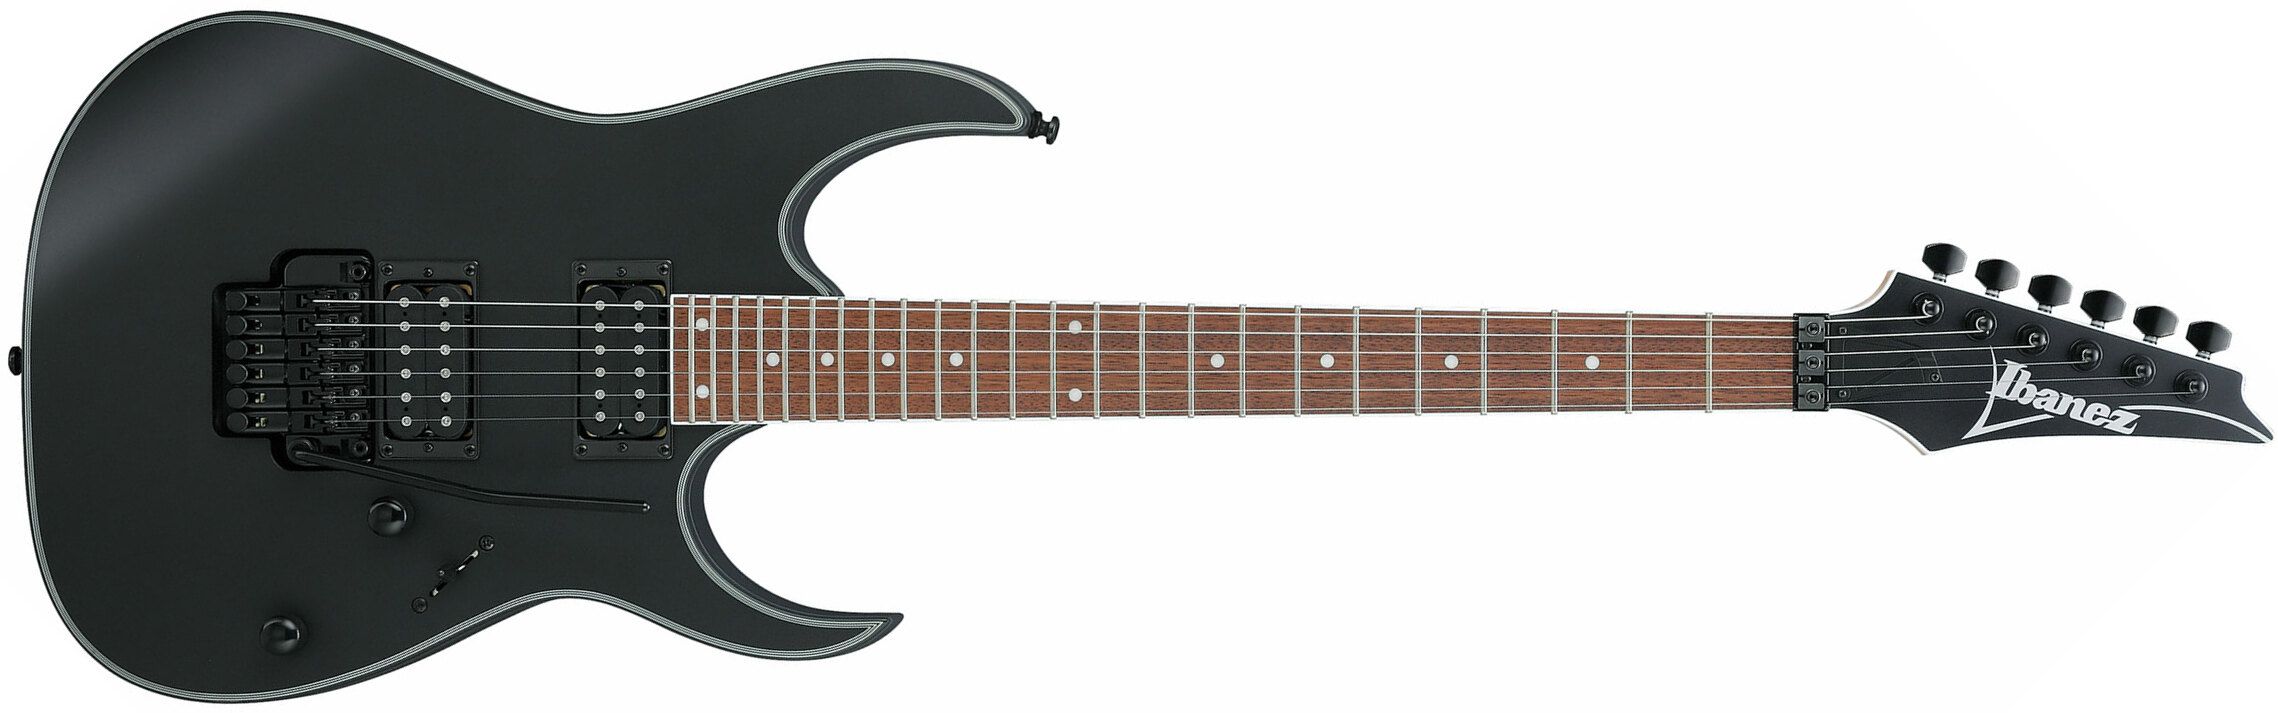 Ibanez Rg320exz Bkf Standard Fr Hh Jat - Black Flat - Str shape electric guitar - Main picture